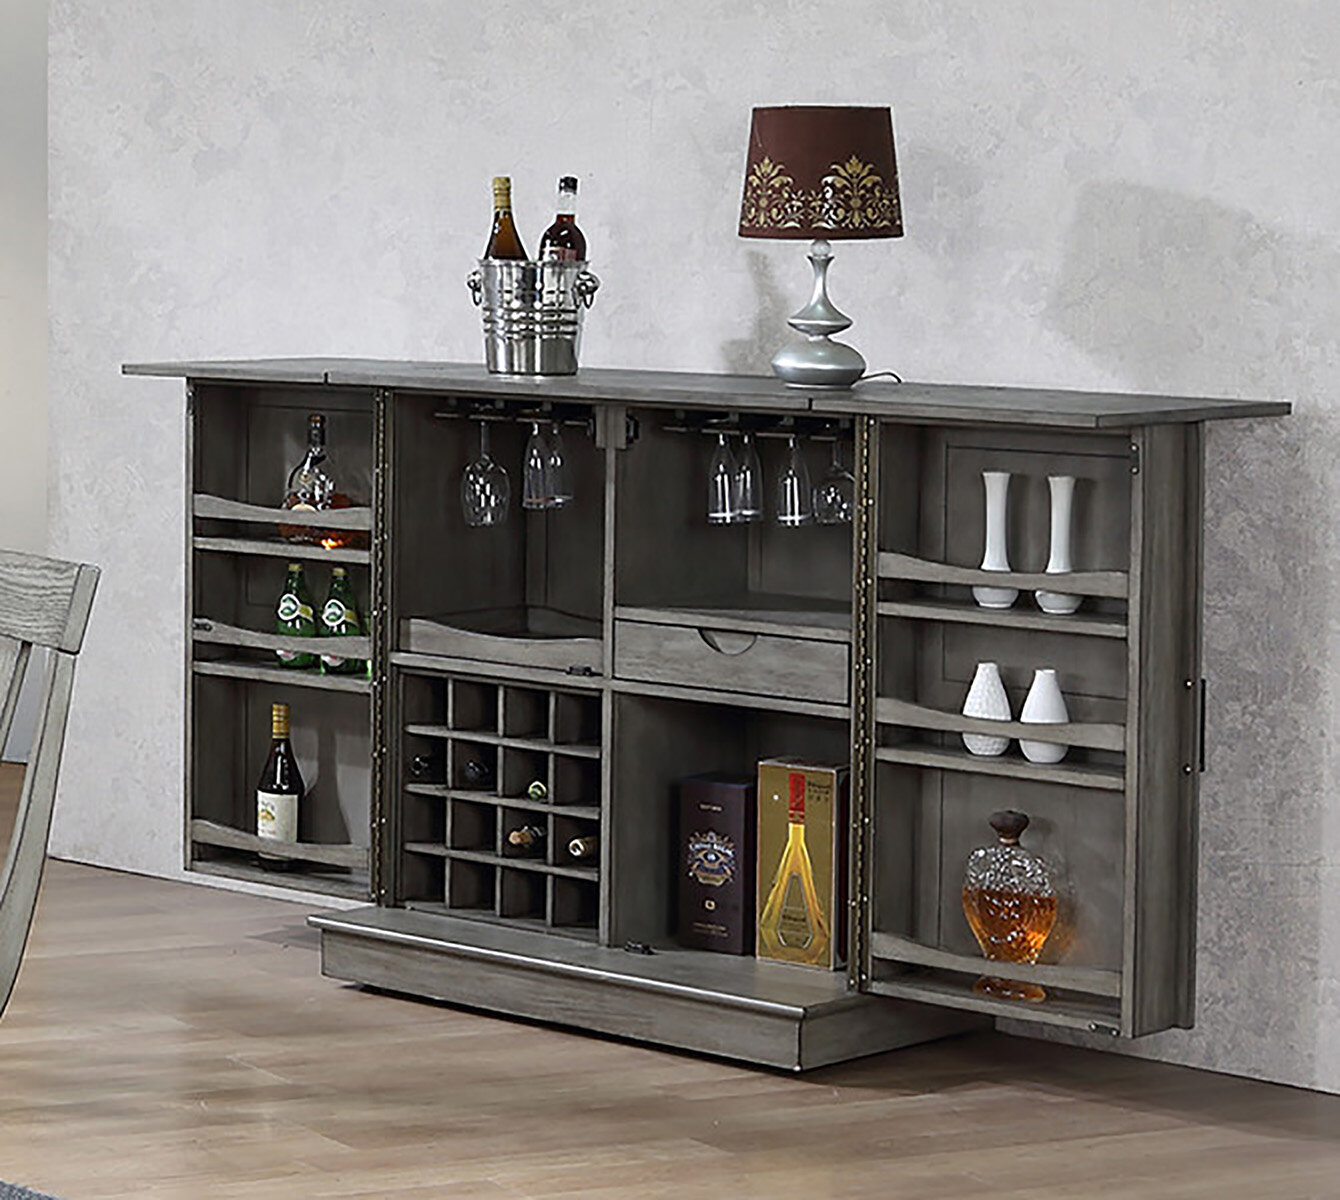 Ophelia Co Vergara Expandable Bar Cabinet Reviews Wayfair for size 1340 X 1200